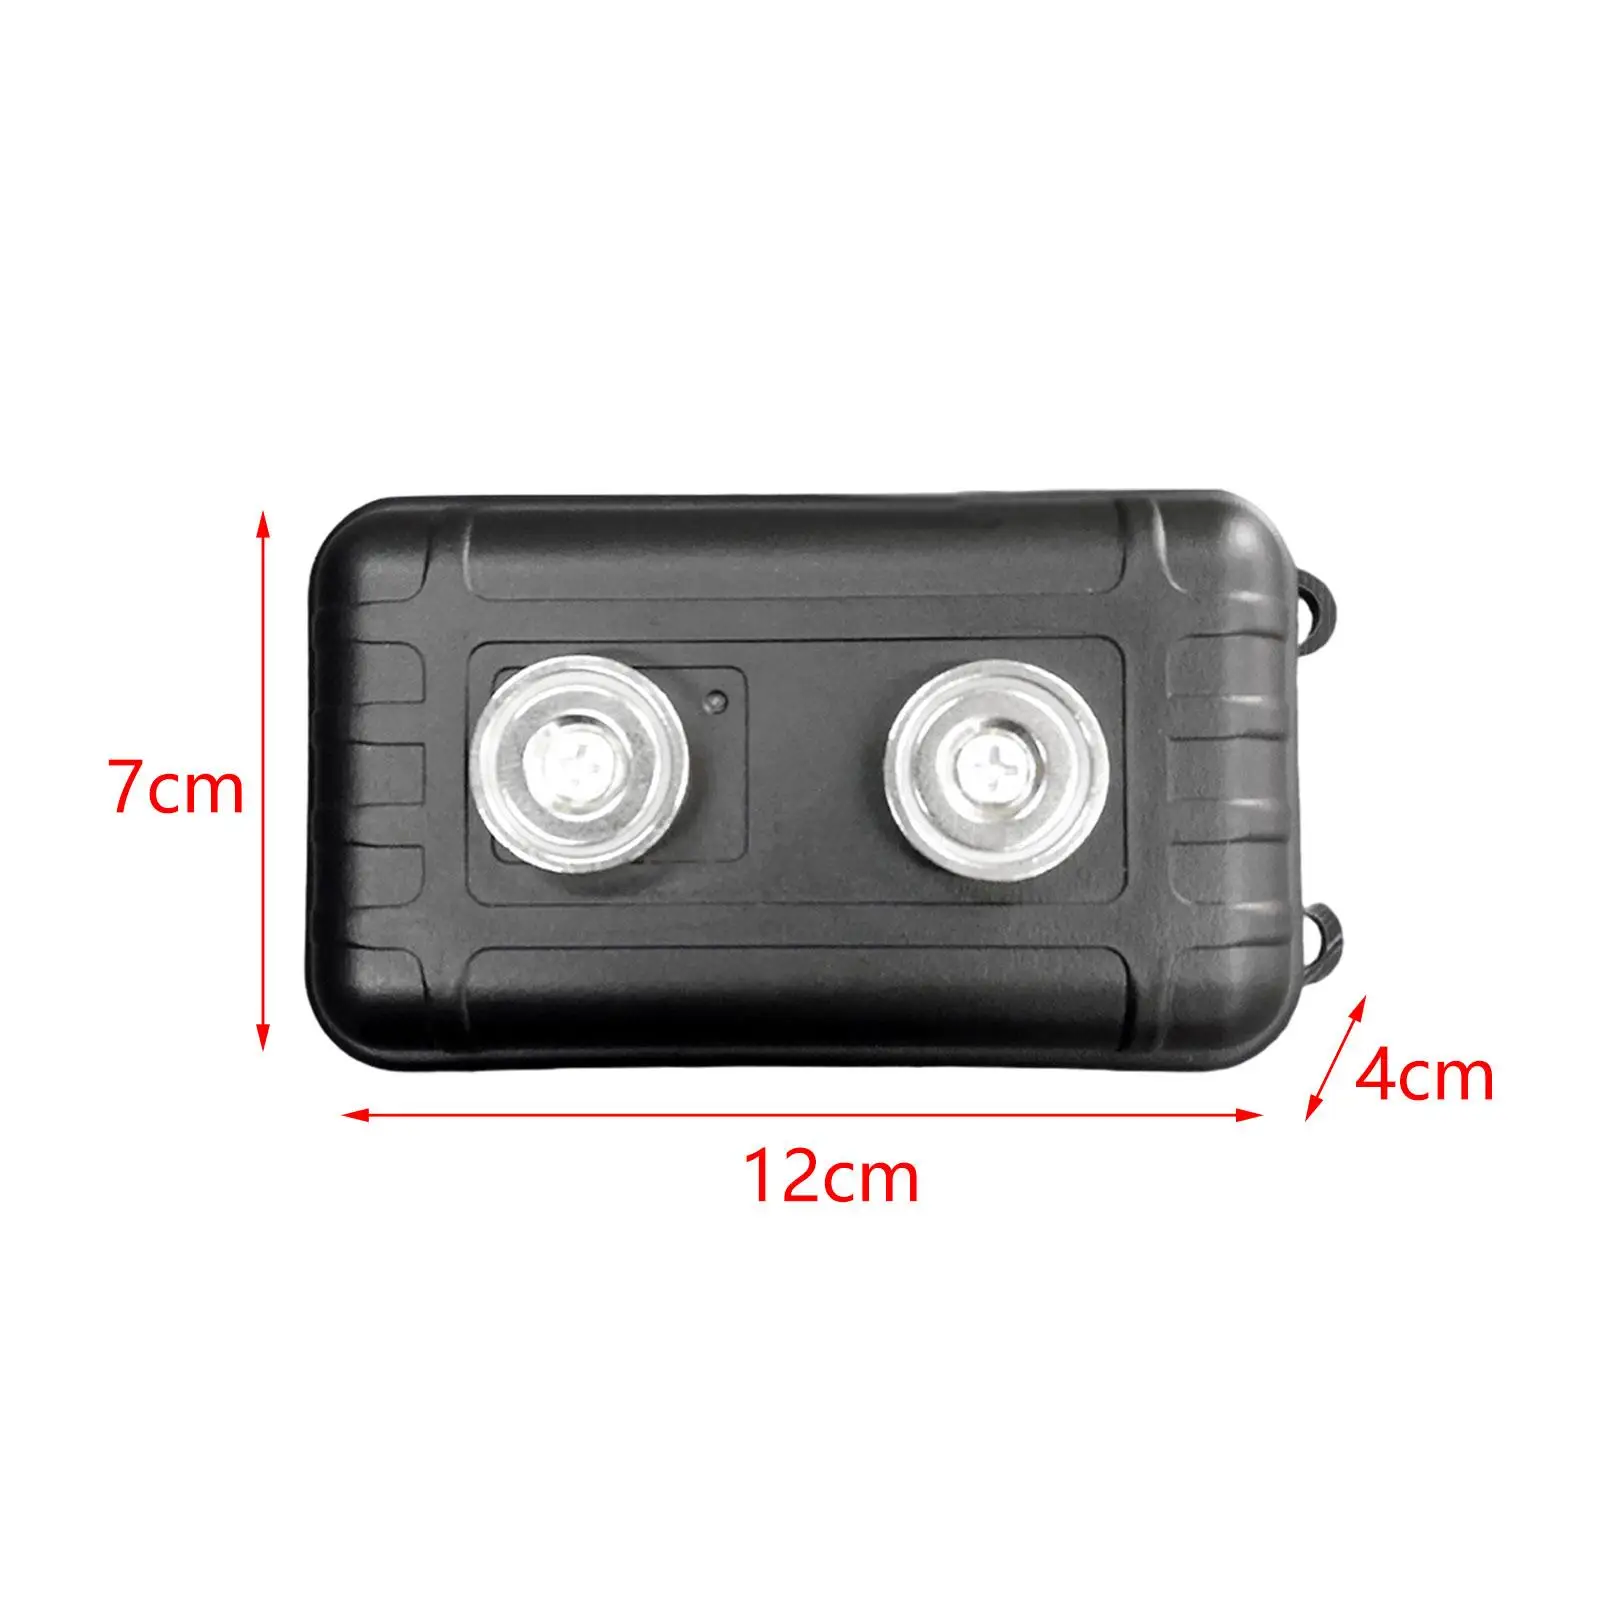 Magnetic Storage Box Rustproof Supplies Key Hider Hide Key Holder Case Stash Box for Outdoor Indoor Under Car Picnic Under Table